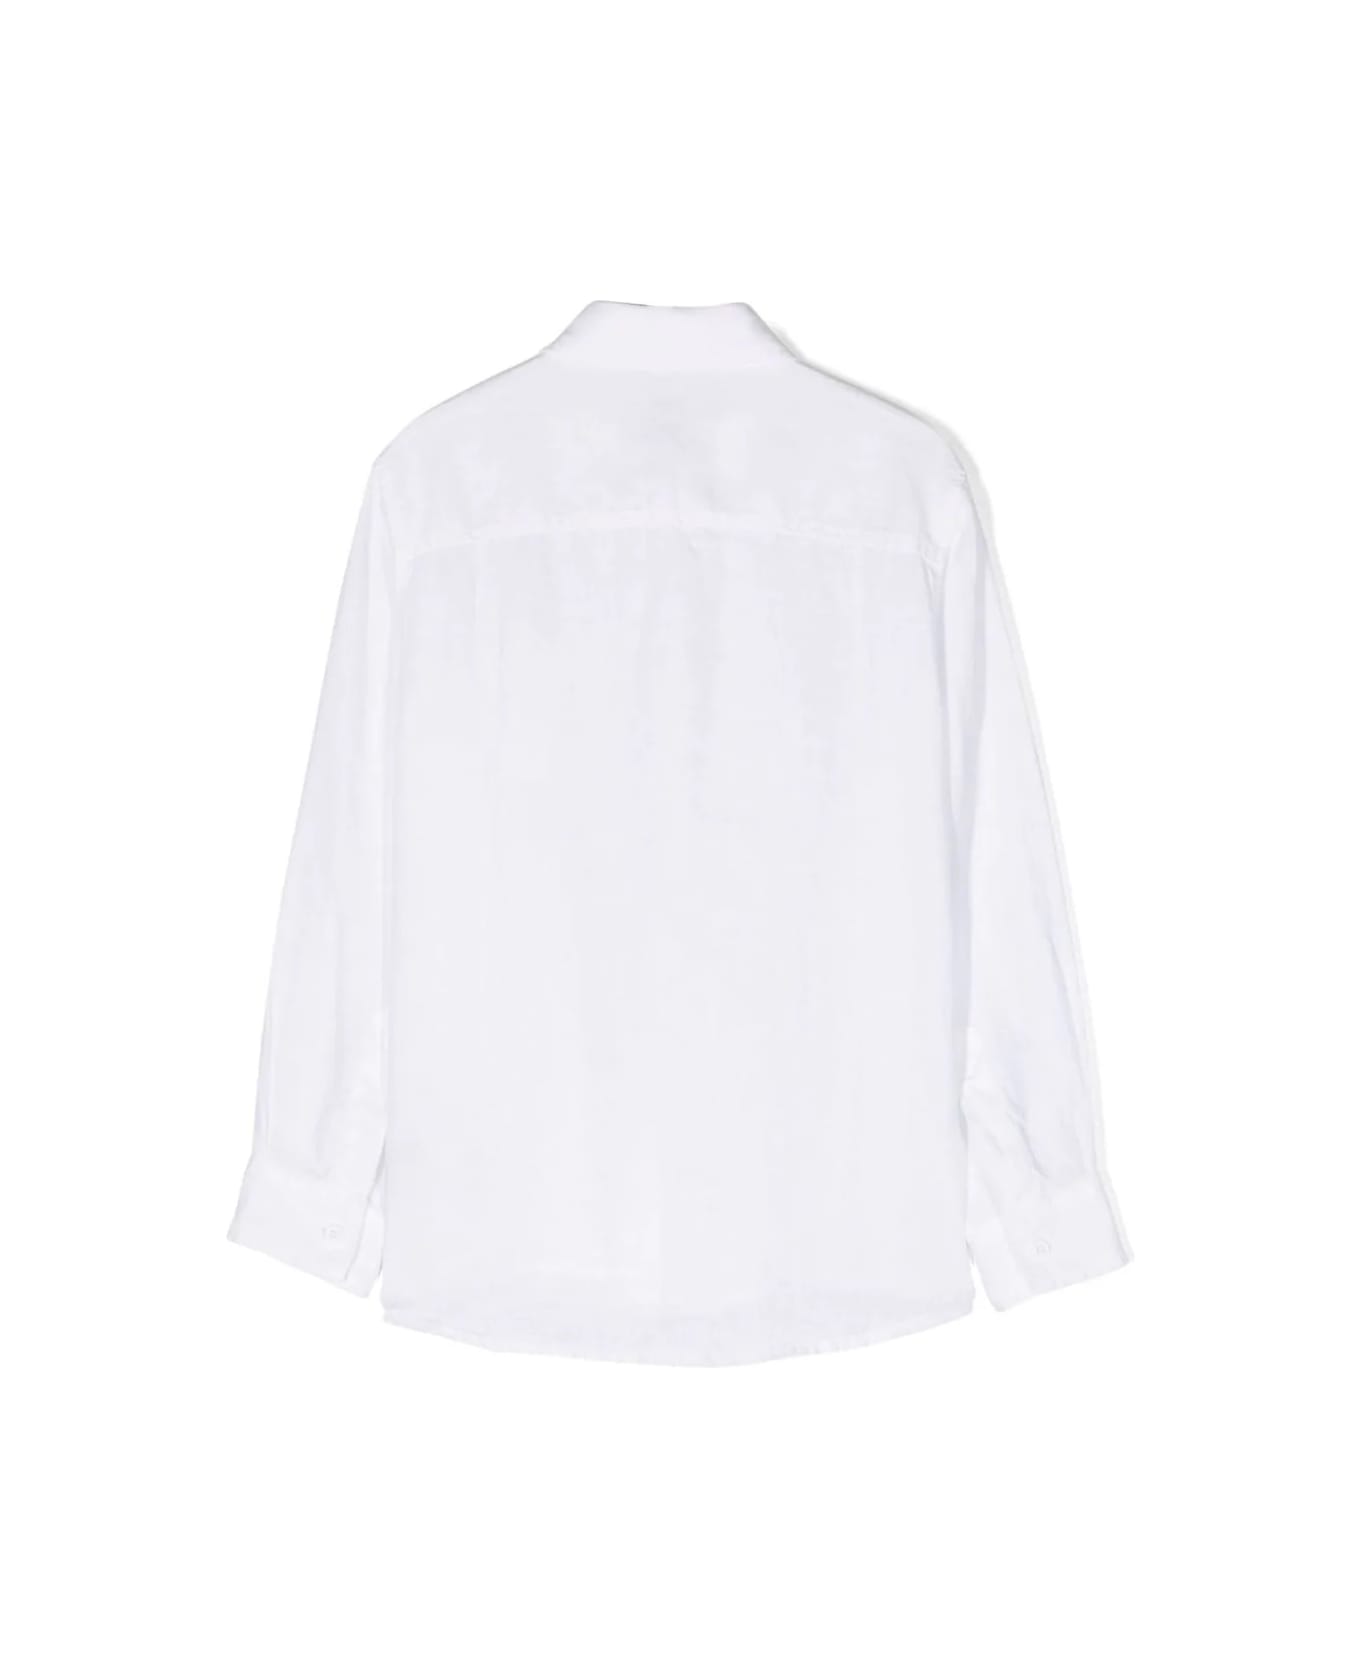 Il Gufo White Linen Shirt With Pocket - Bianco シャツ